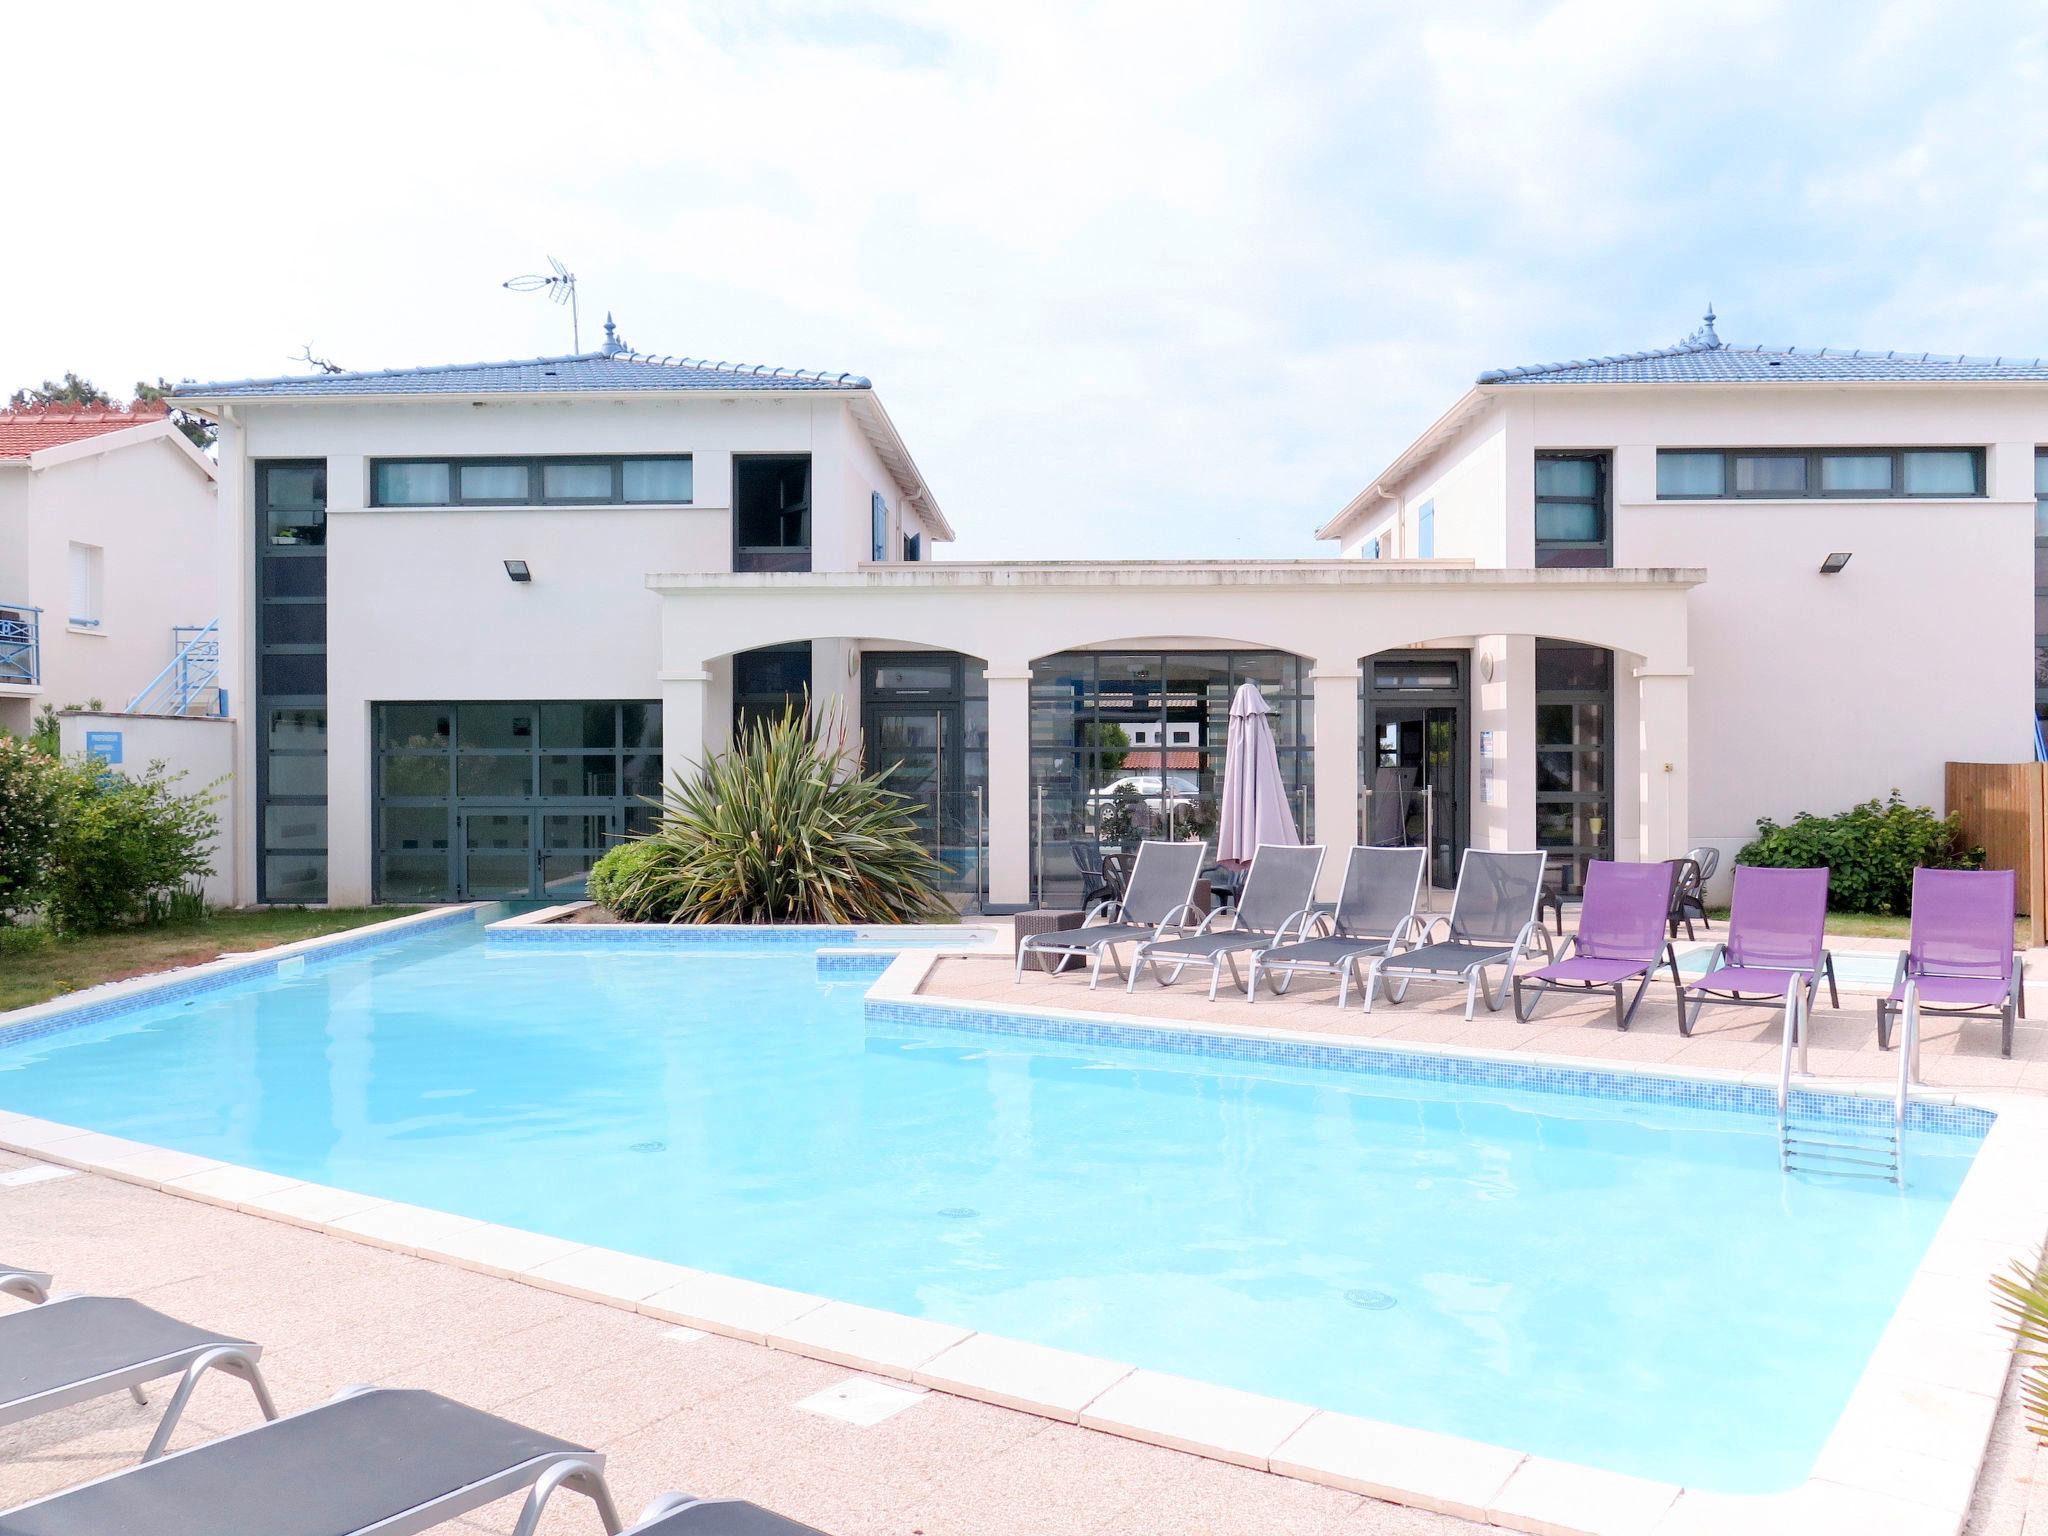 Foto 1 - Appartamento con 3 camere da letto a Saint-Palais-sur-Mer con piscina e vista mare